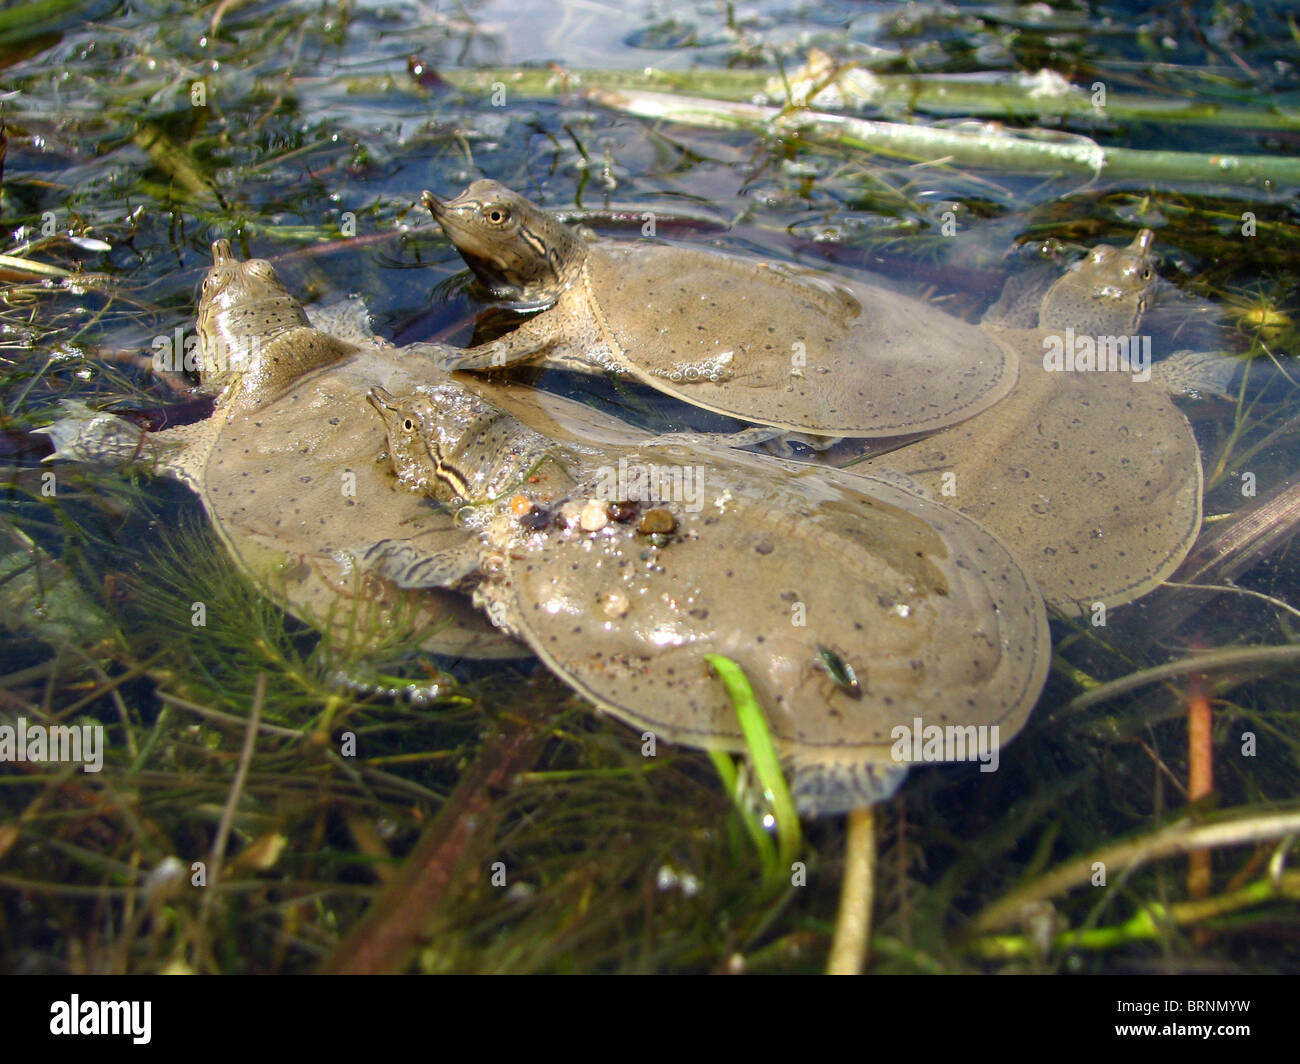 Hatchling Spiny Softshell Turtles (Apalone spinifera) Stock Photo